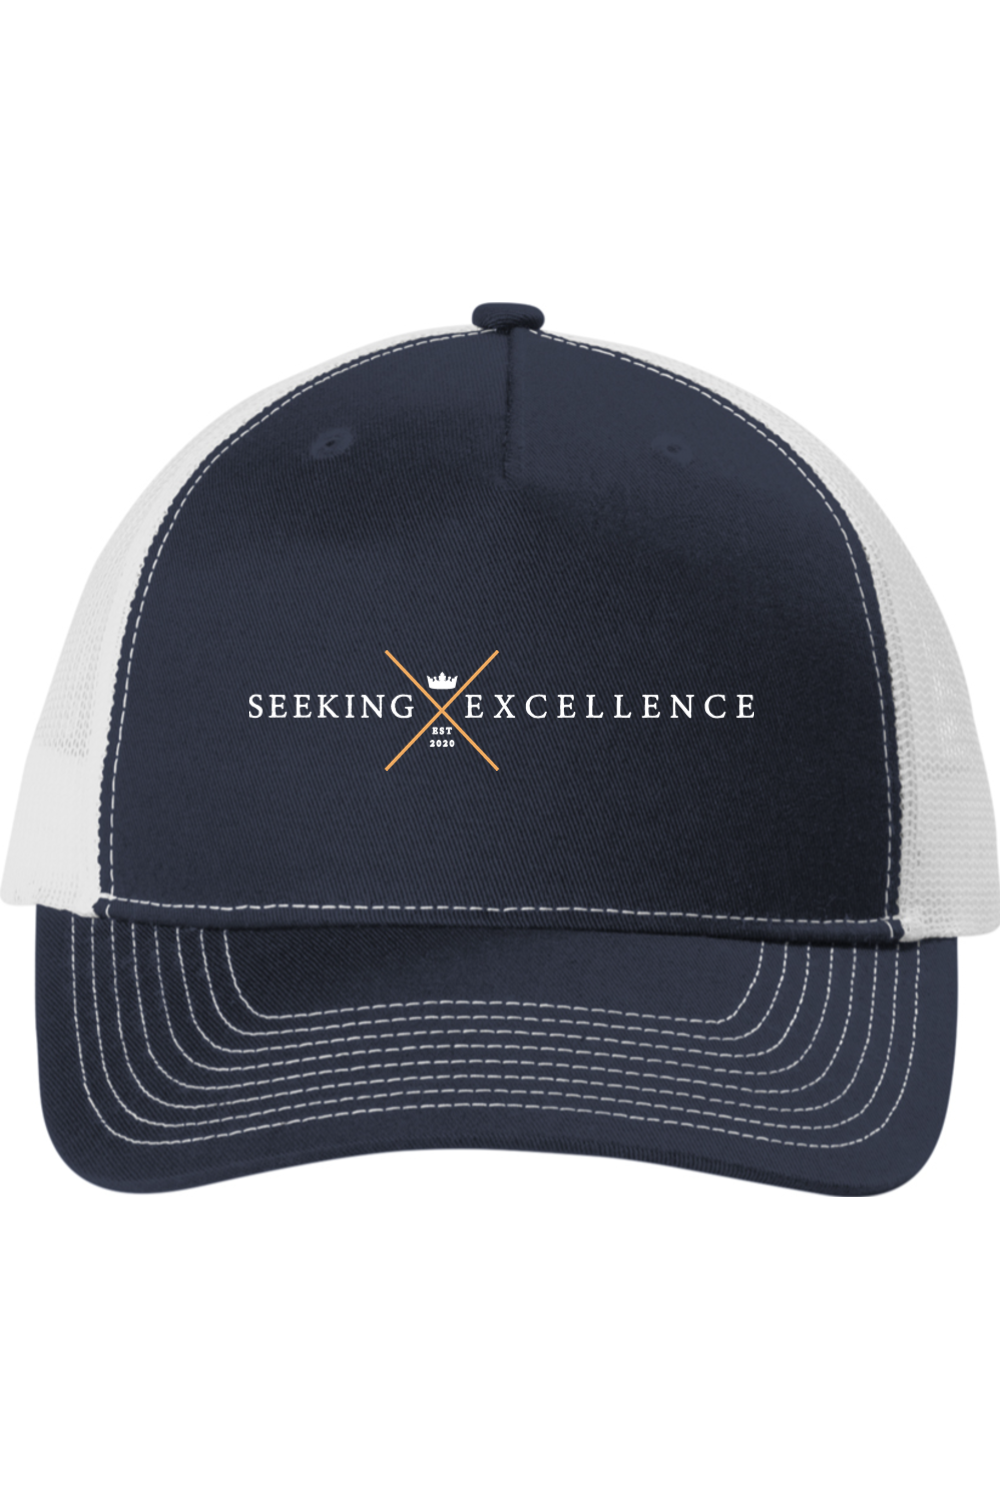 Seeking Excellence Hat